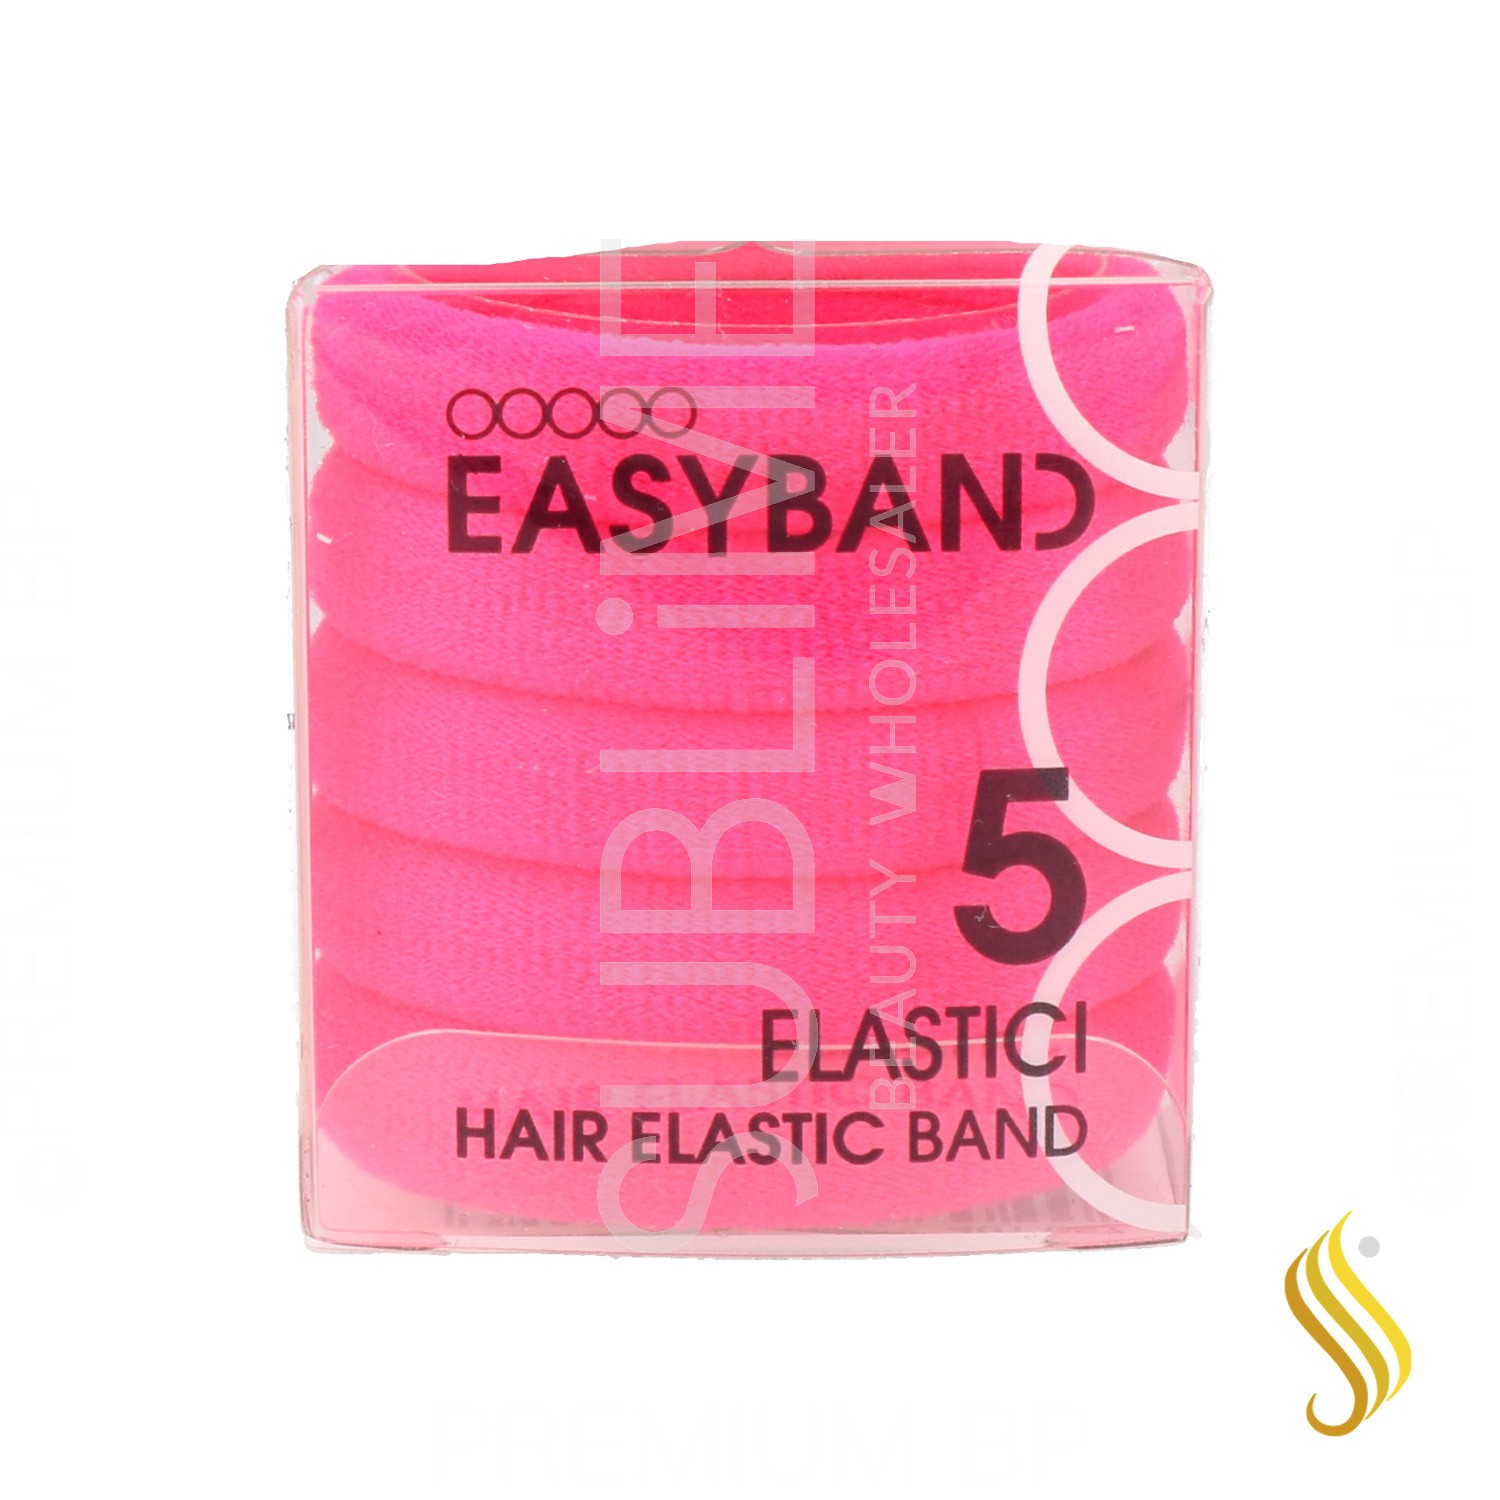 XAN PRO EASY BAND HAIR ELASTIC BAND 1X5U (COLETERO FUCSIA)